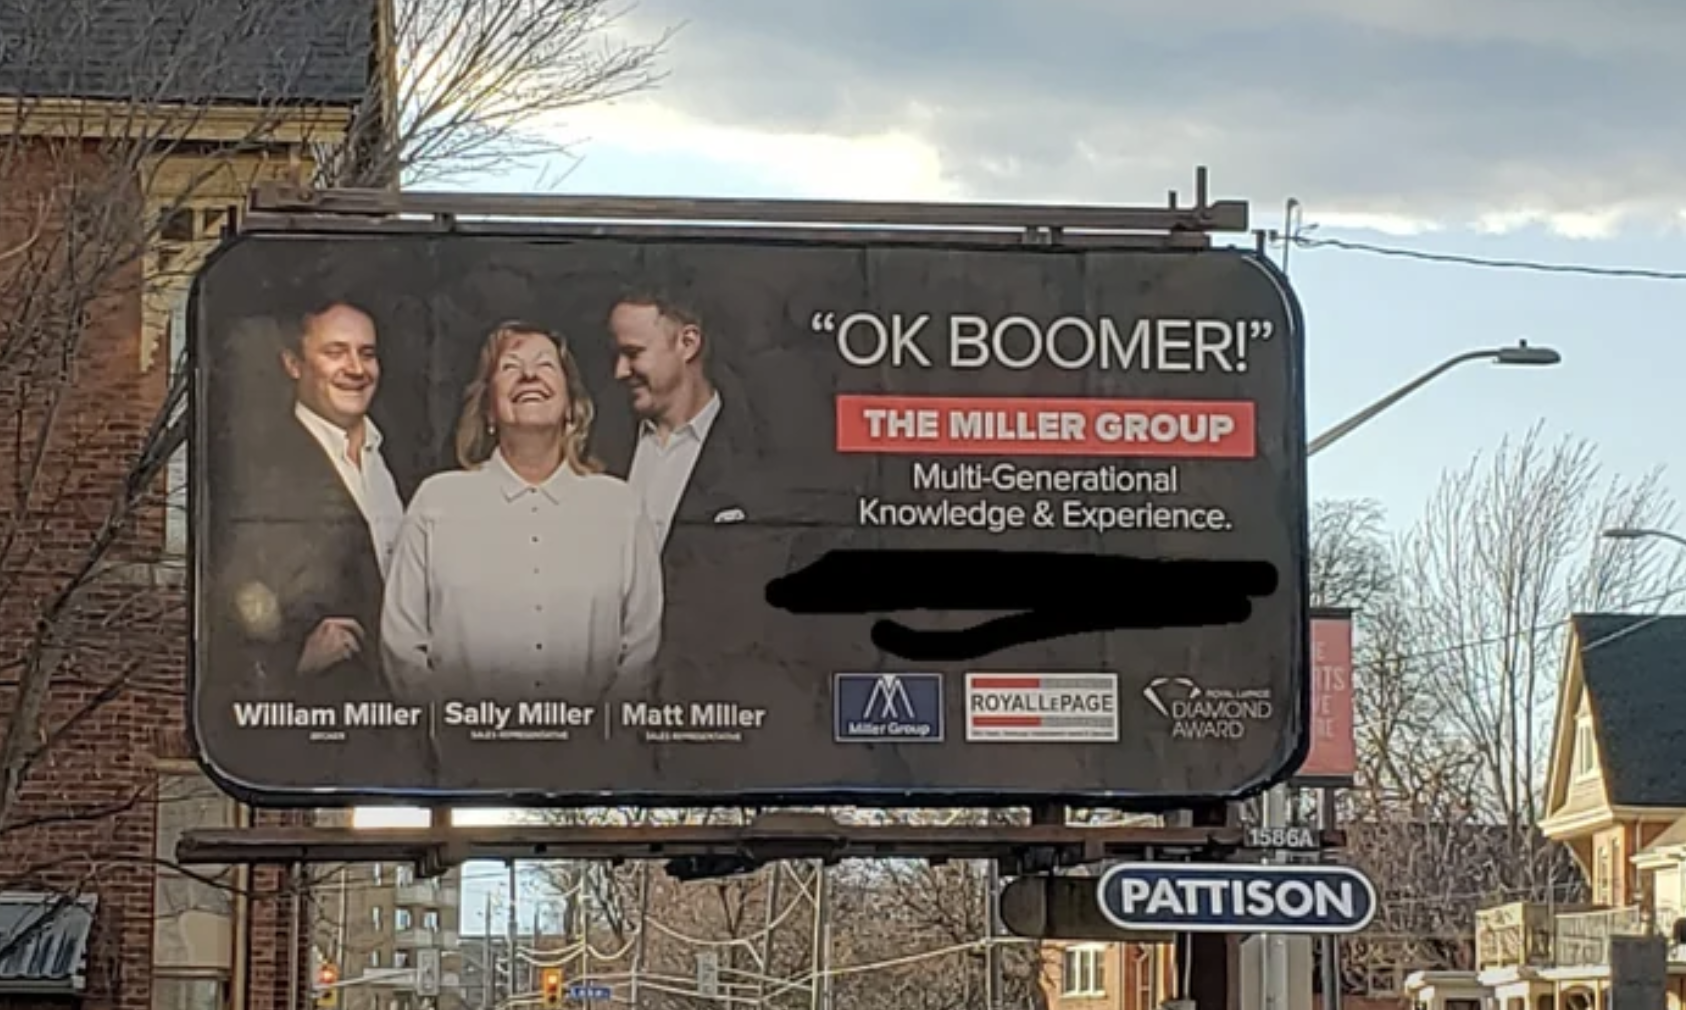 realtor billboard says &quot;OK BOOMER!